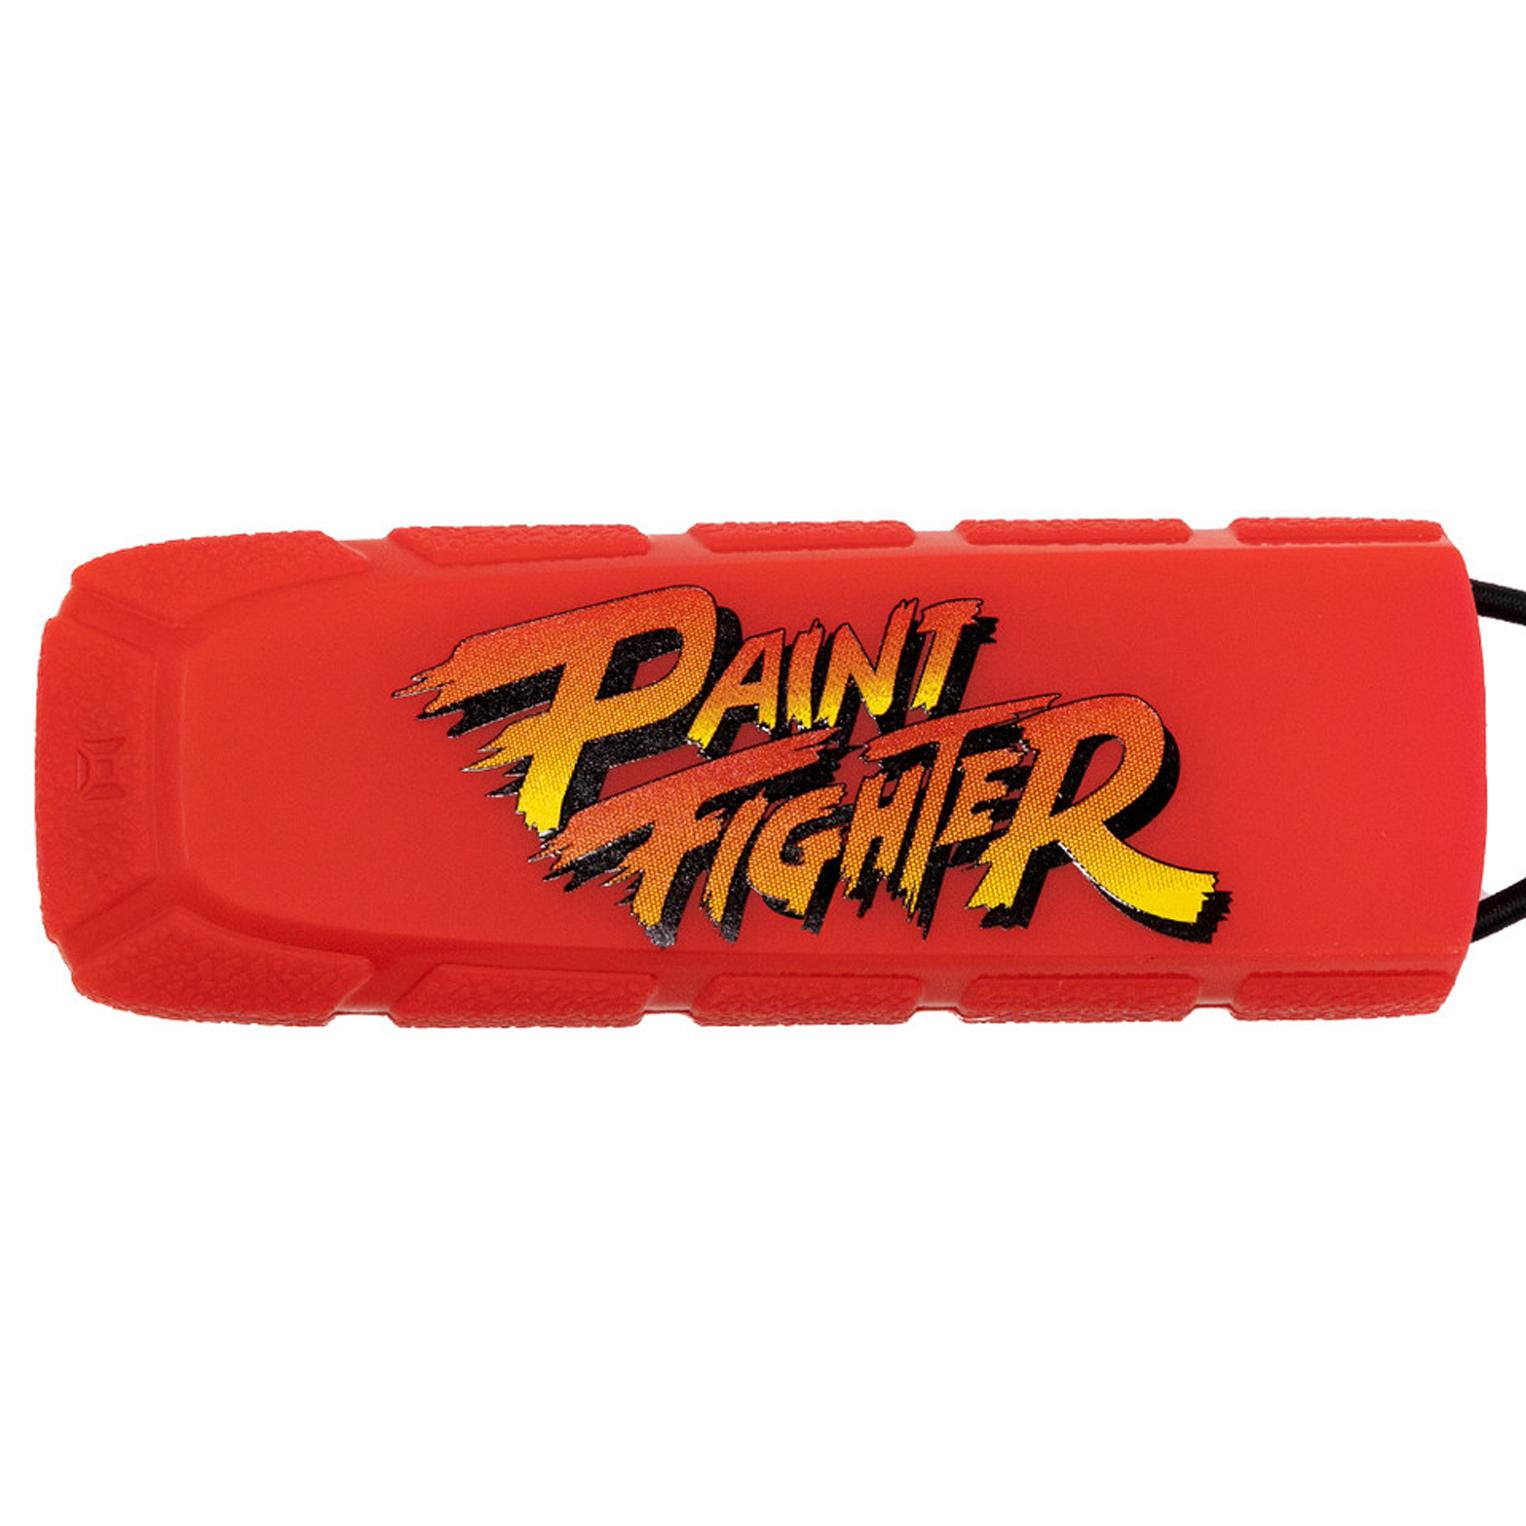 Exalt Bayonet Paint Fighter Red